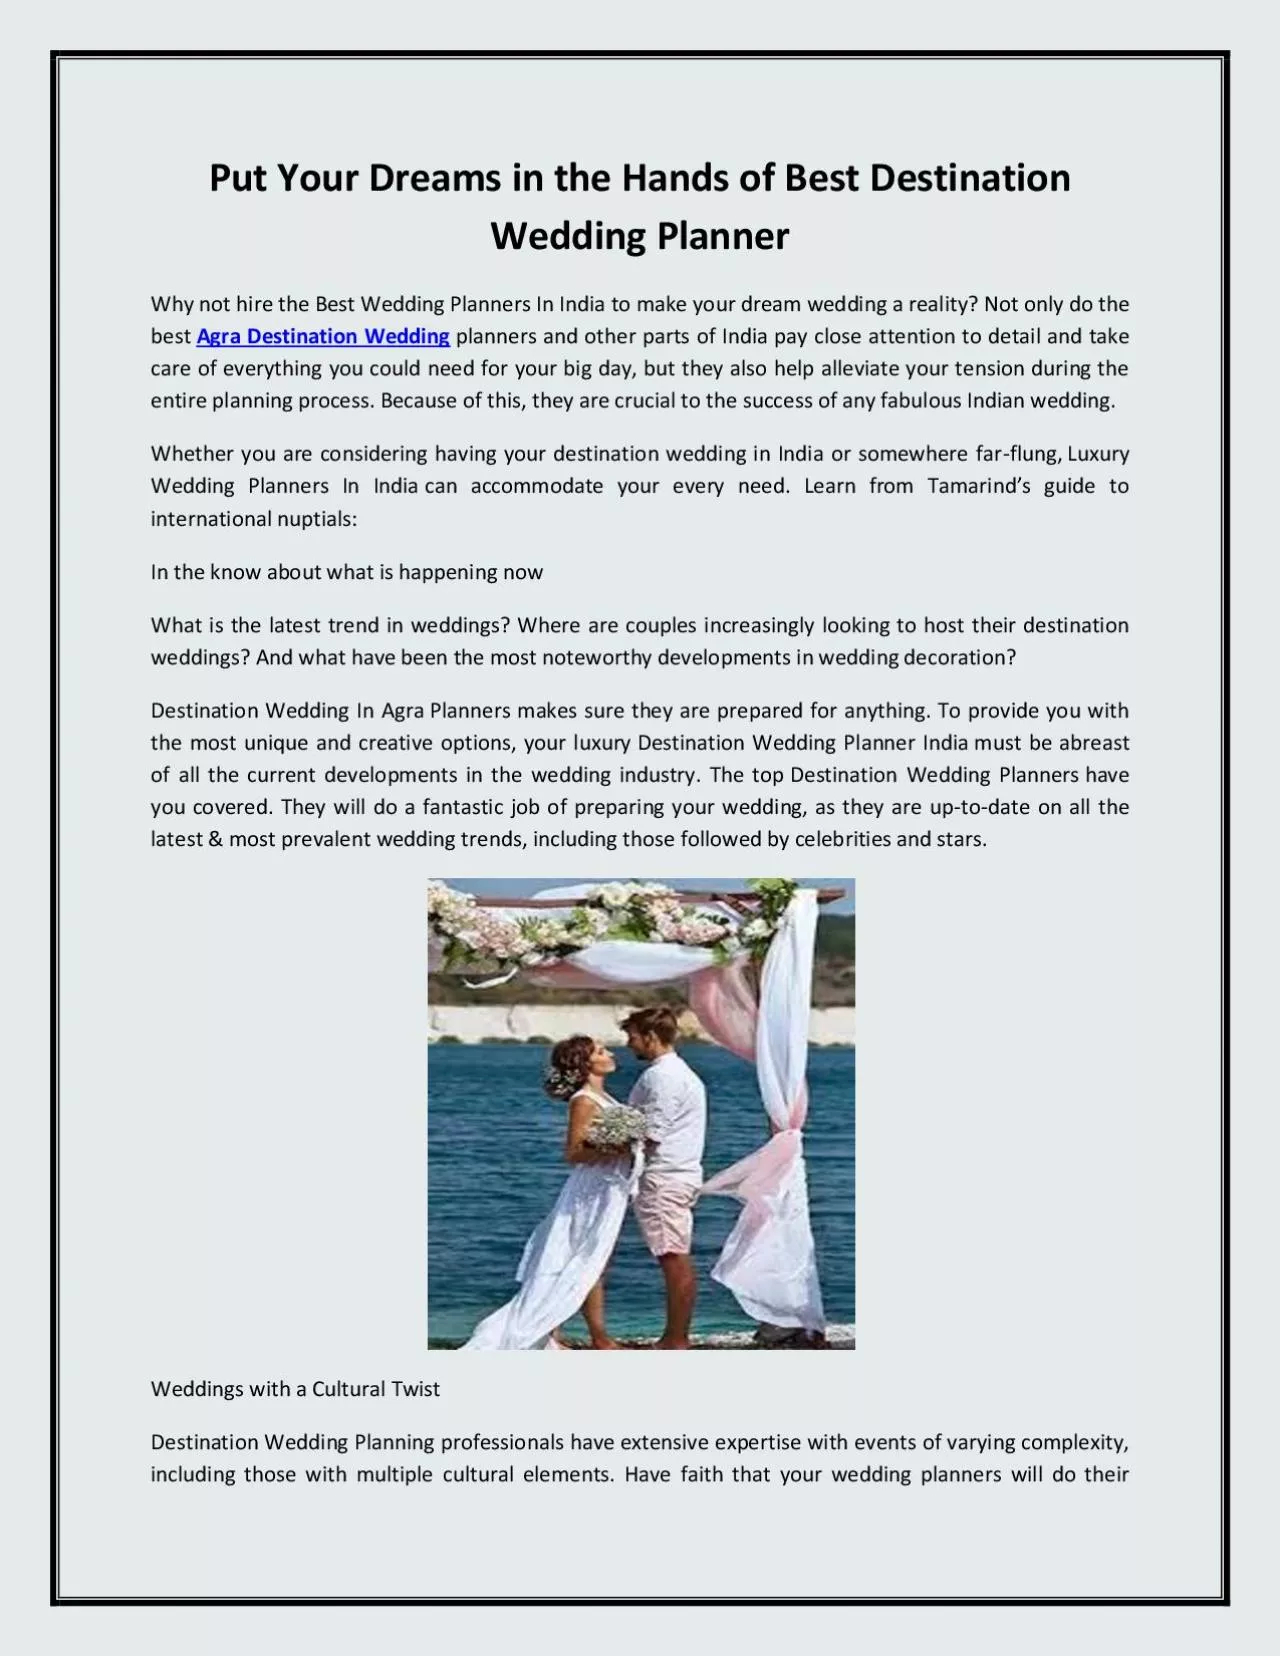 Put Your Dreams in the Hands of Best Destination Wedding Planner